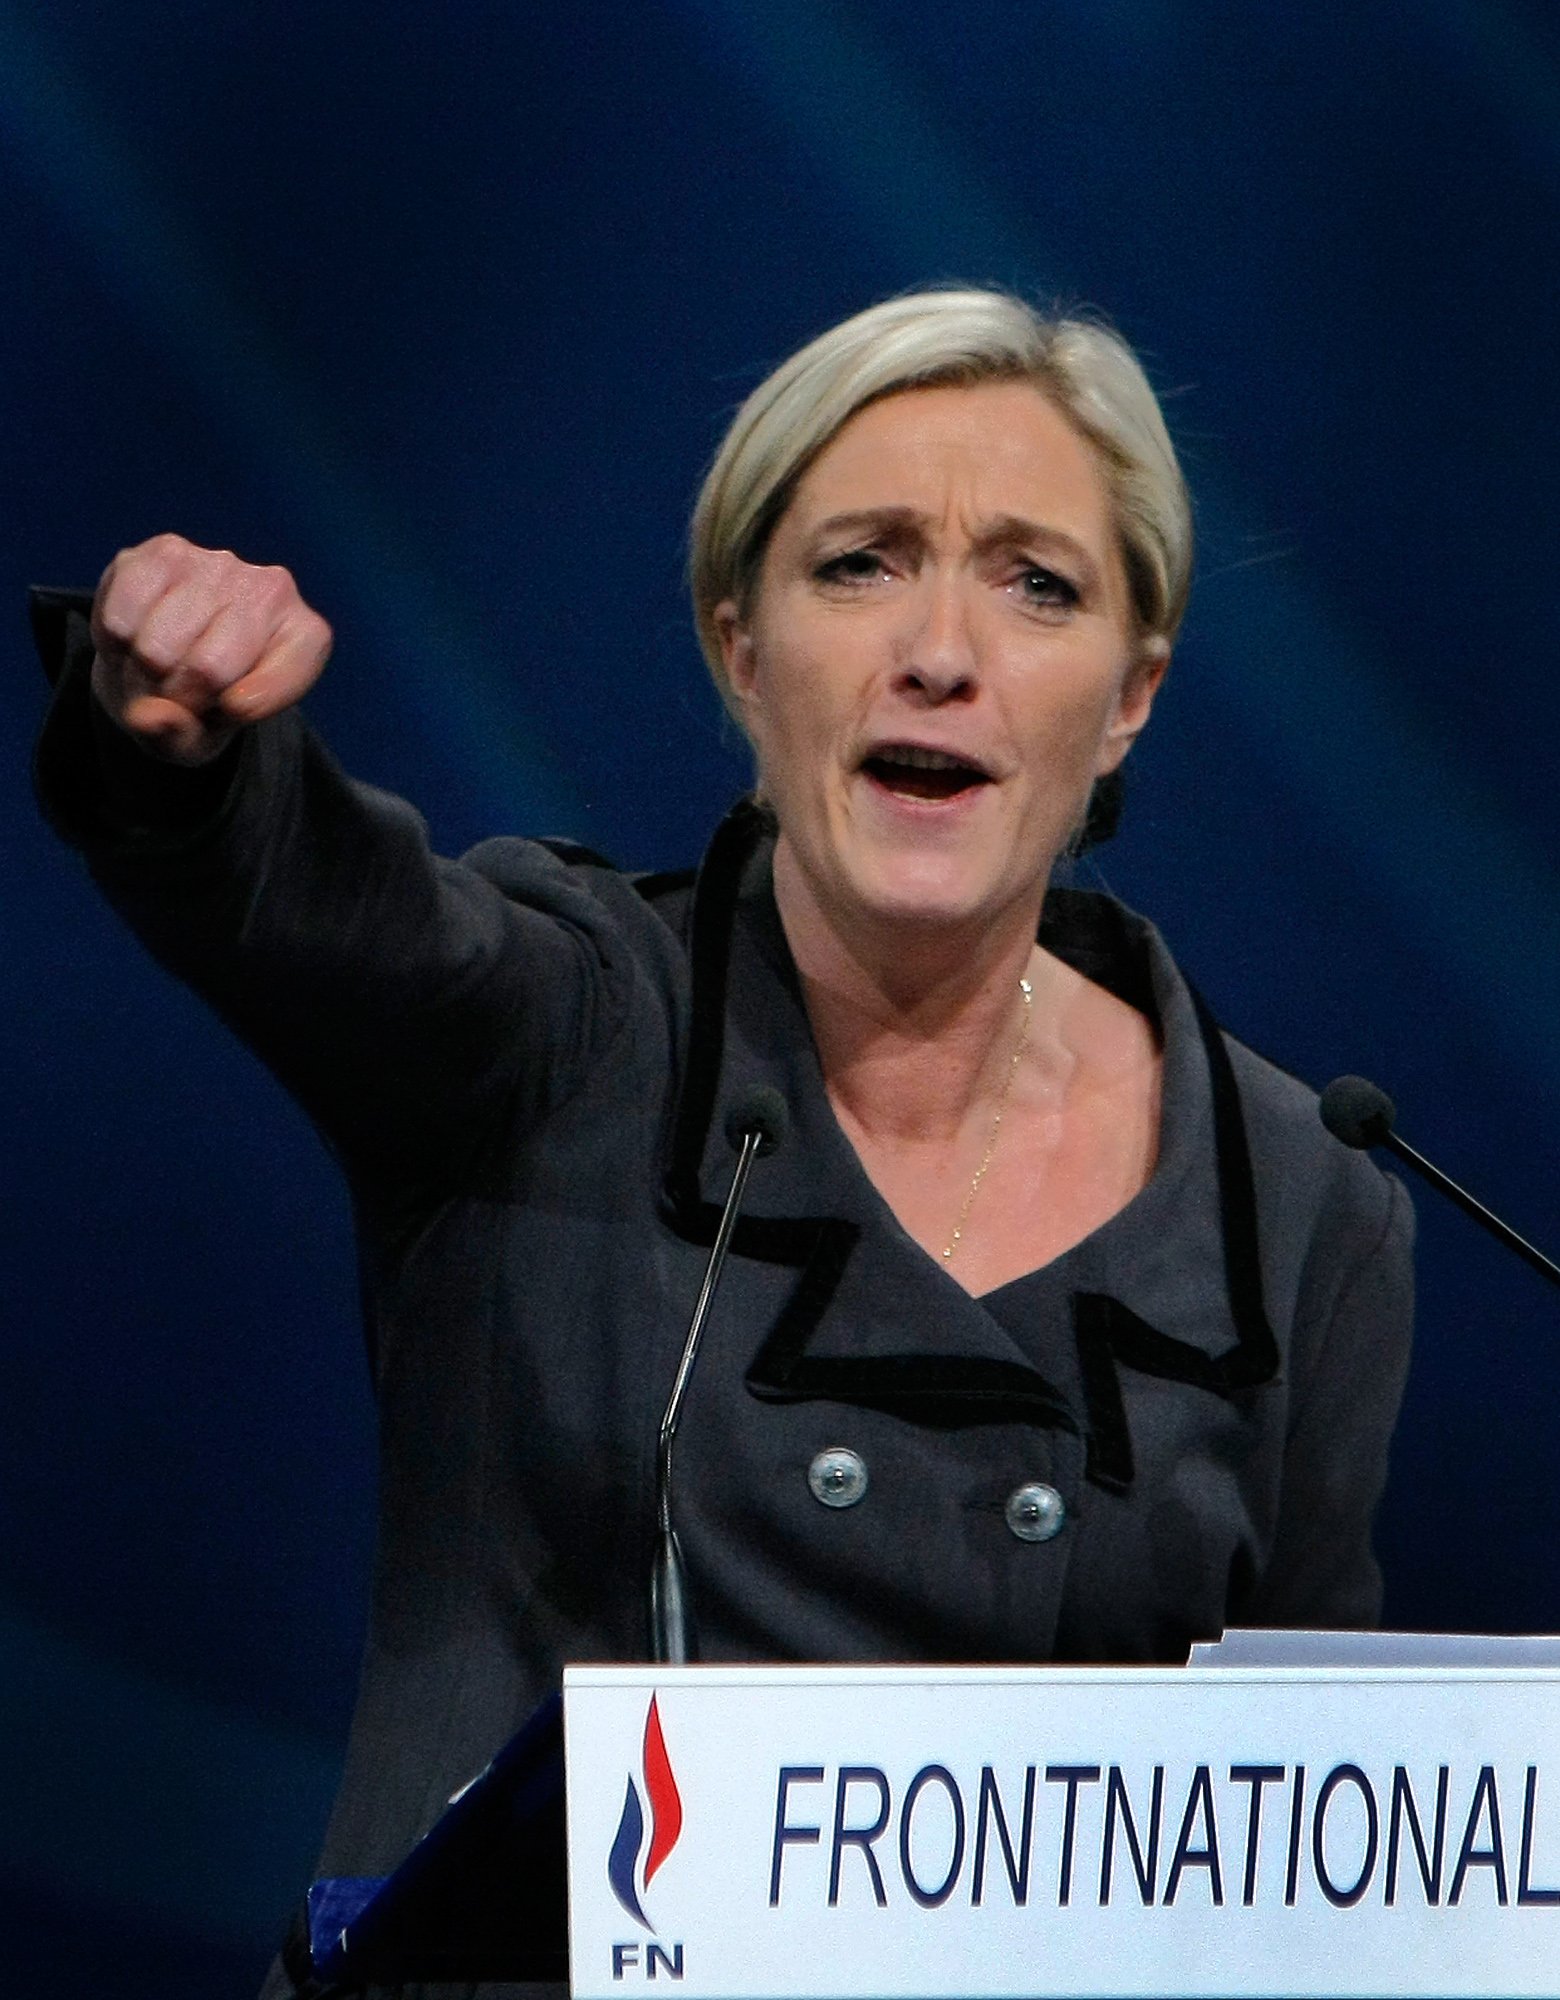 David Cameron, Marine Le Pen, Le Pen, Angela Merkel, Tyskland, Islamofobi, Storbritannien, Frankrike, Tories, Front National, Multikulturalism, Nicolas Sarkozy